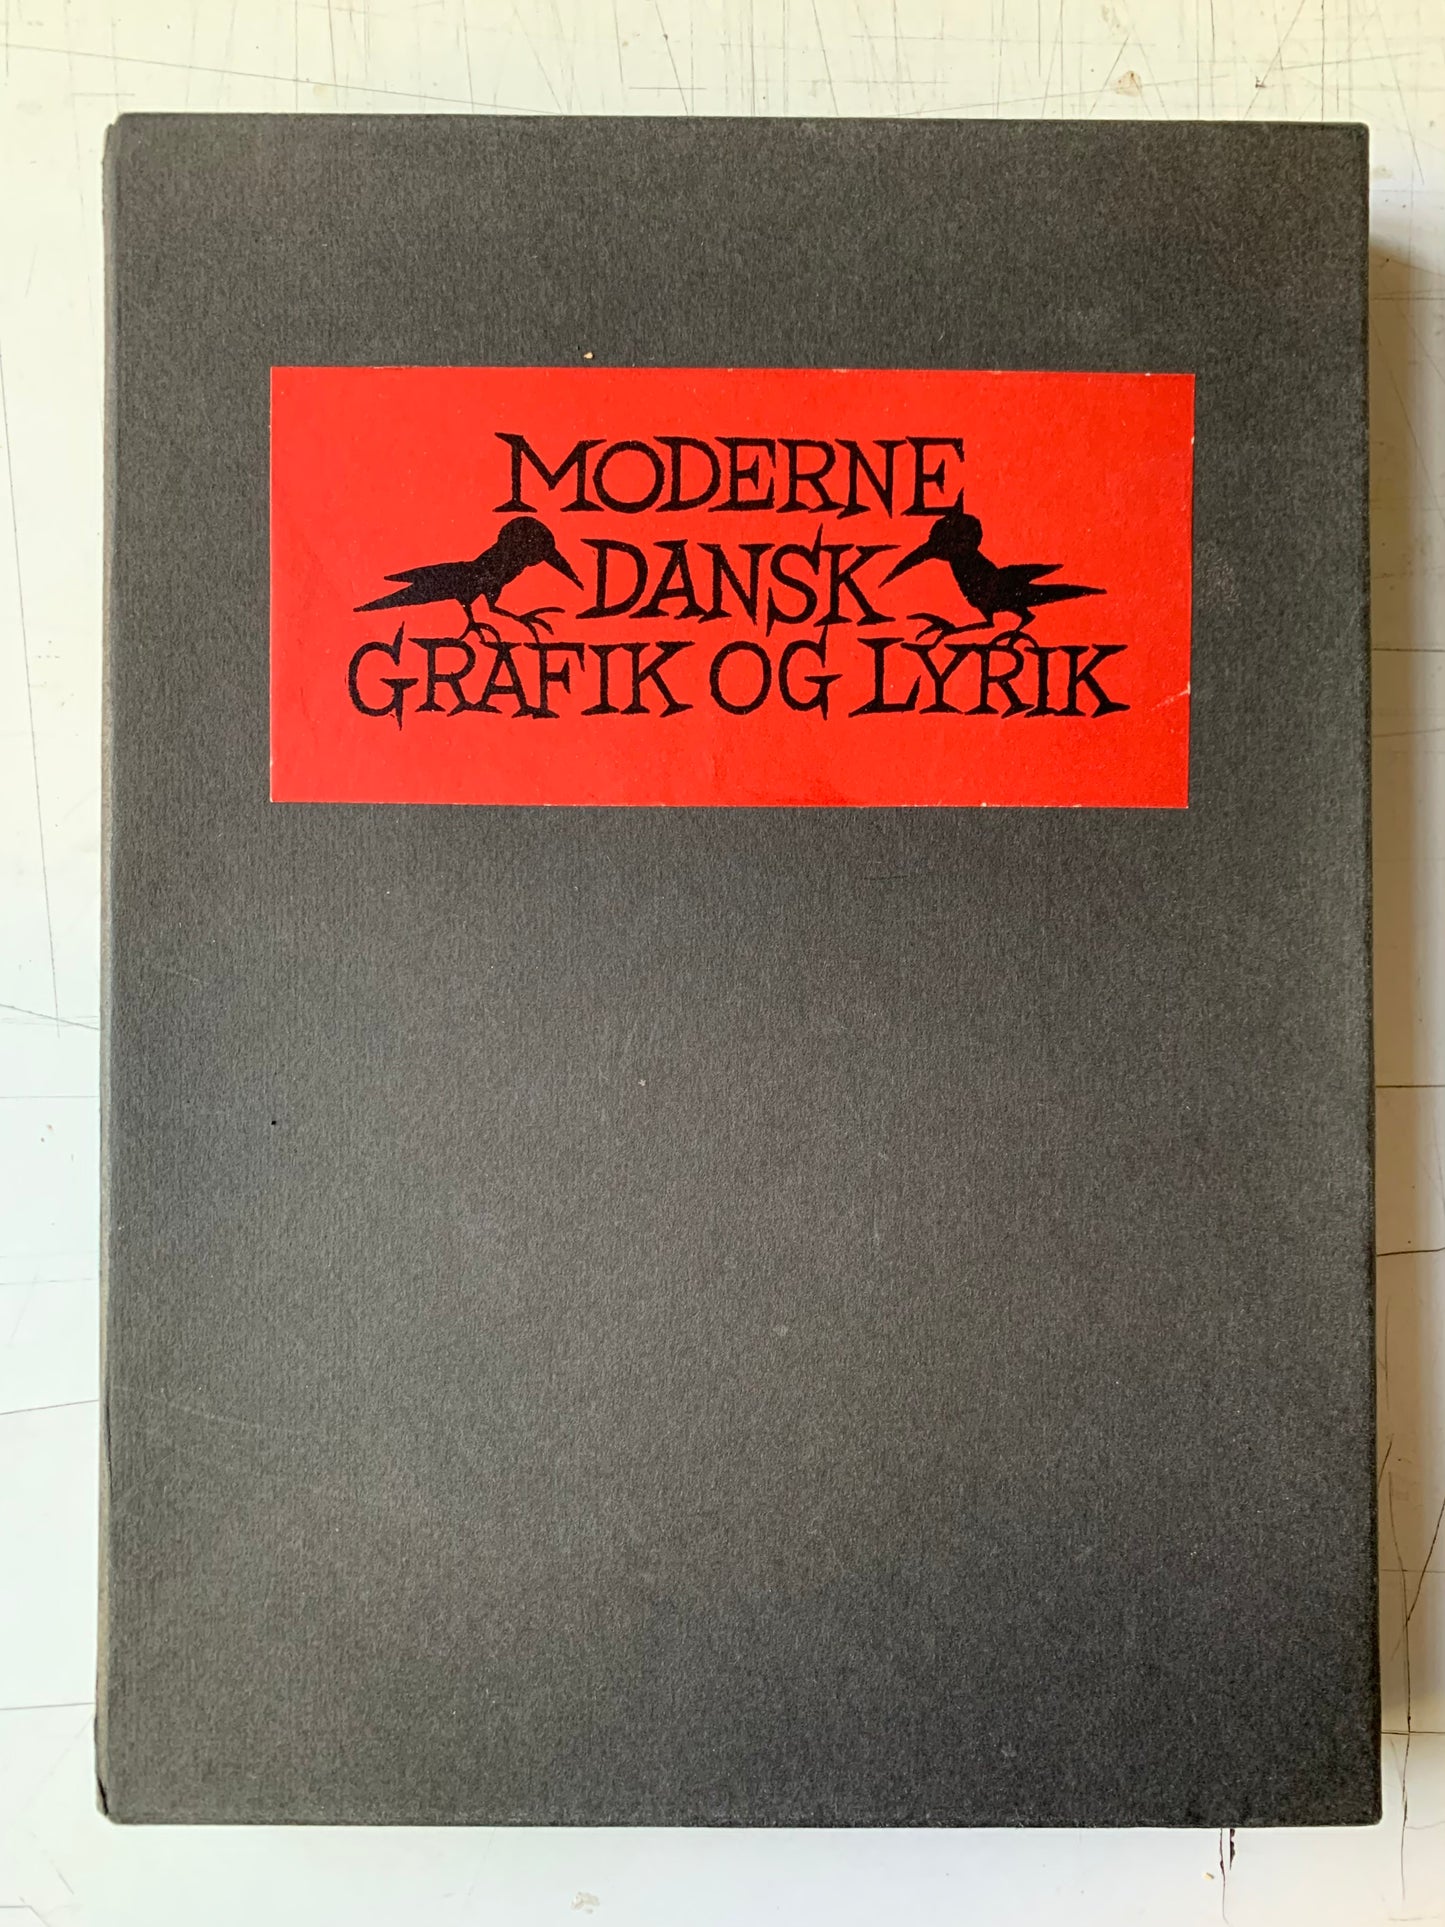 Jan Garff. “Moderne Dansk Grafik og Lyrik”, original prints by J. F. Willumsen a.o, 1960